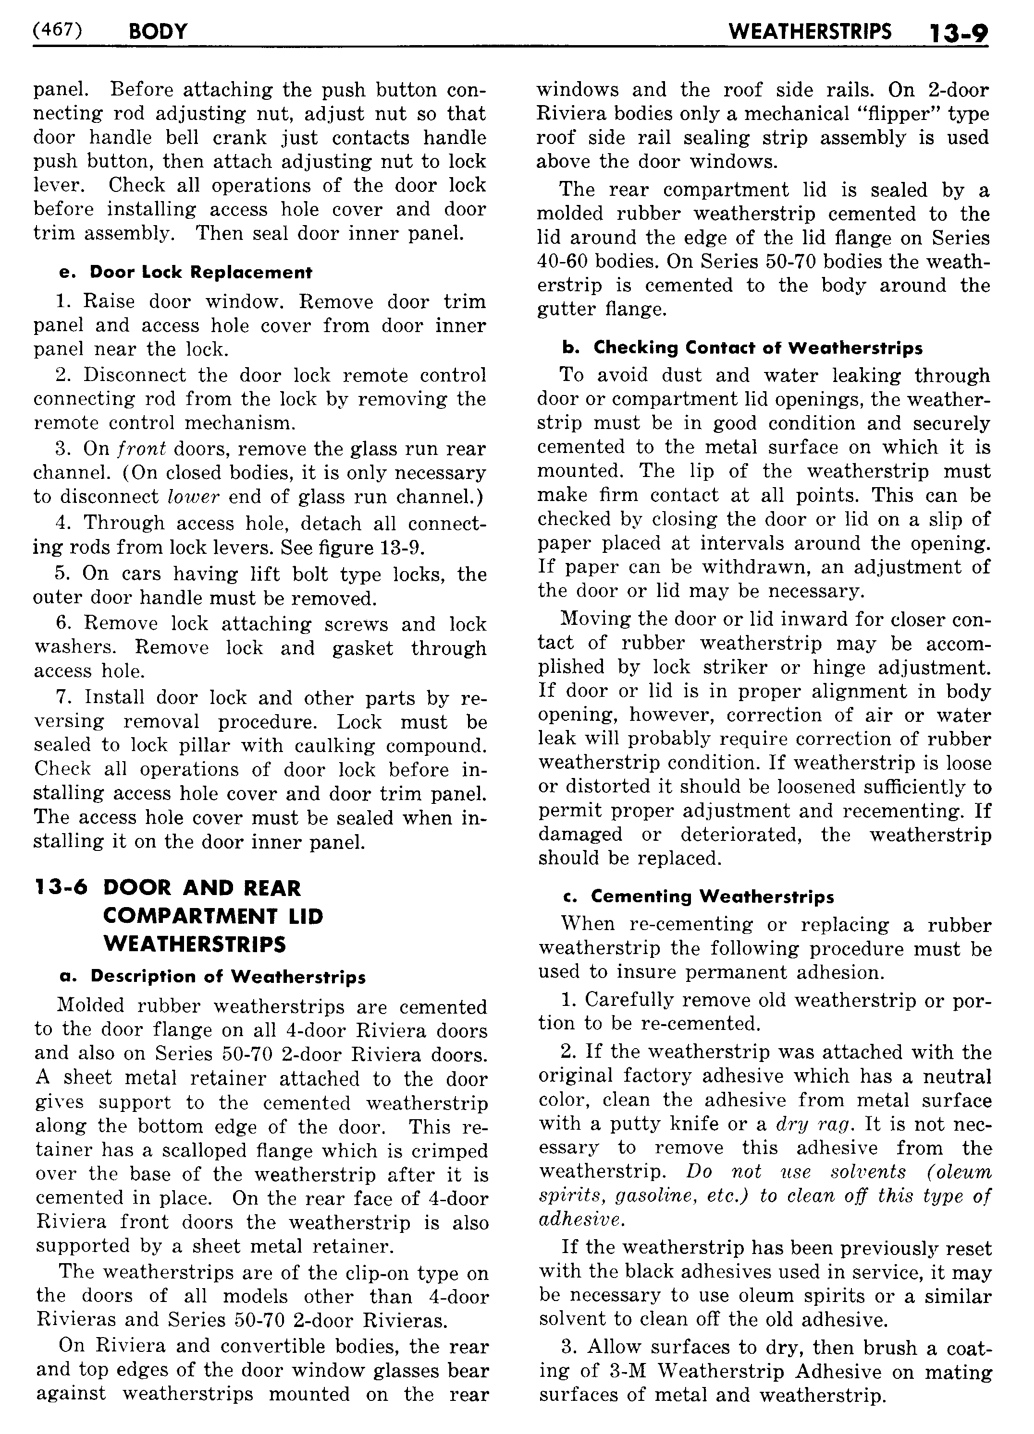 n_14 1956 Buick Shop Manual - Body-009-009.jpg